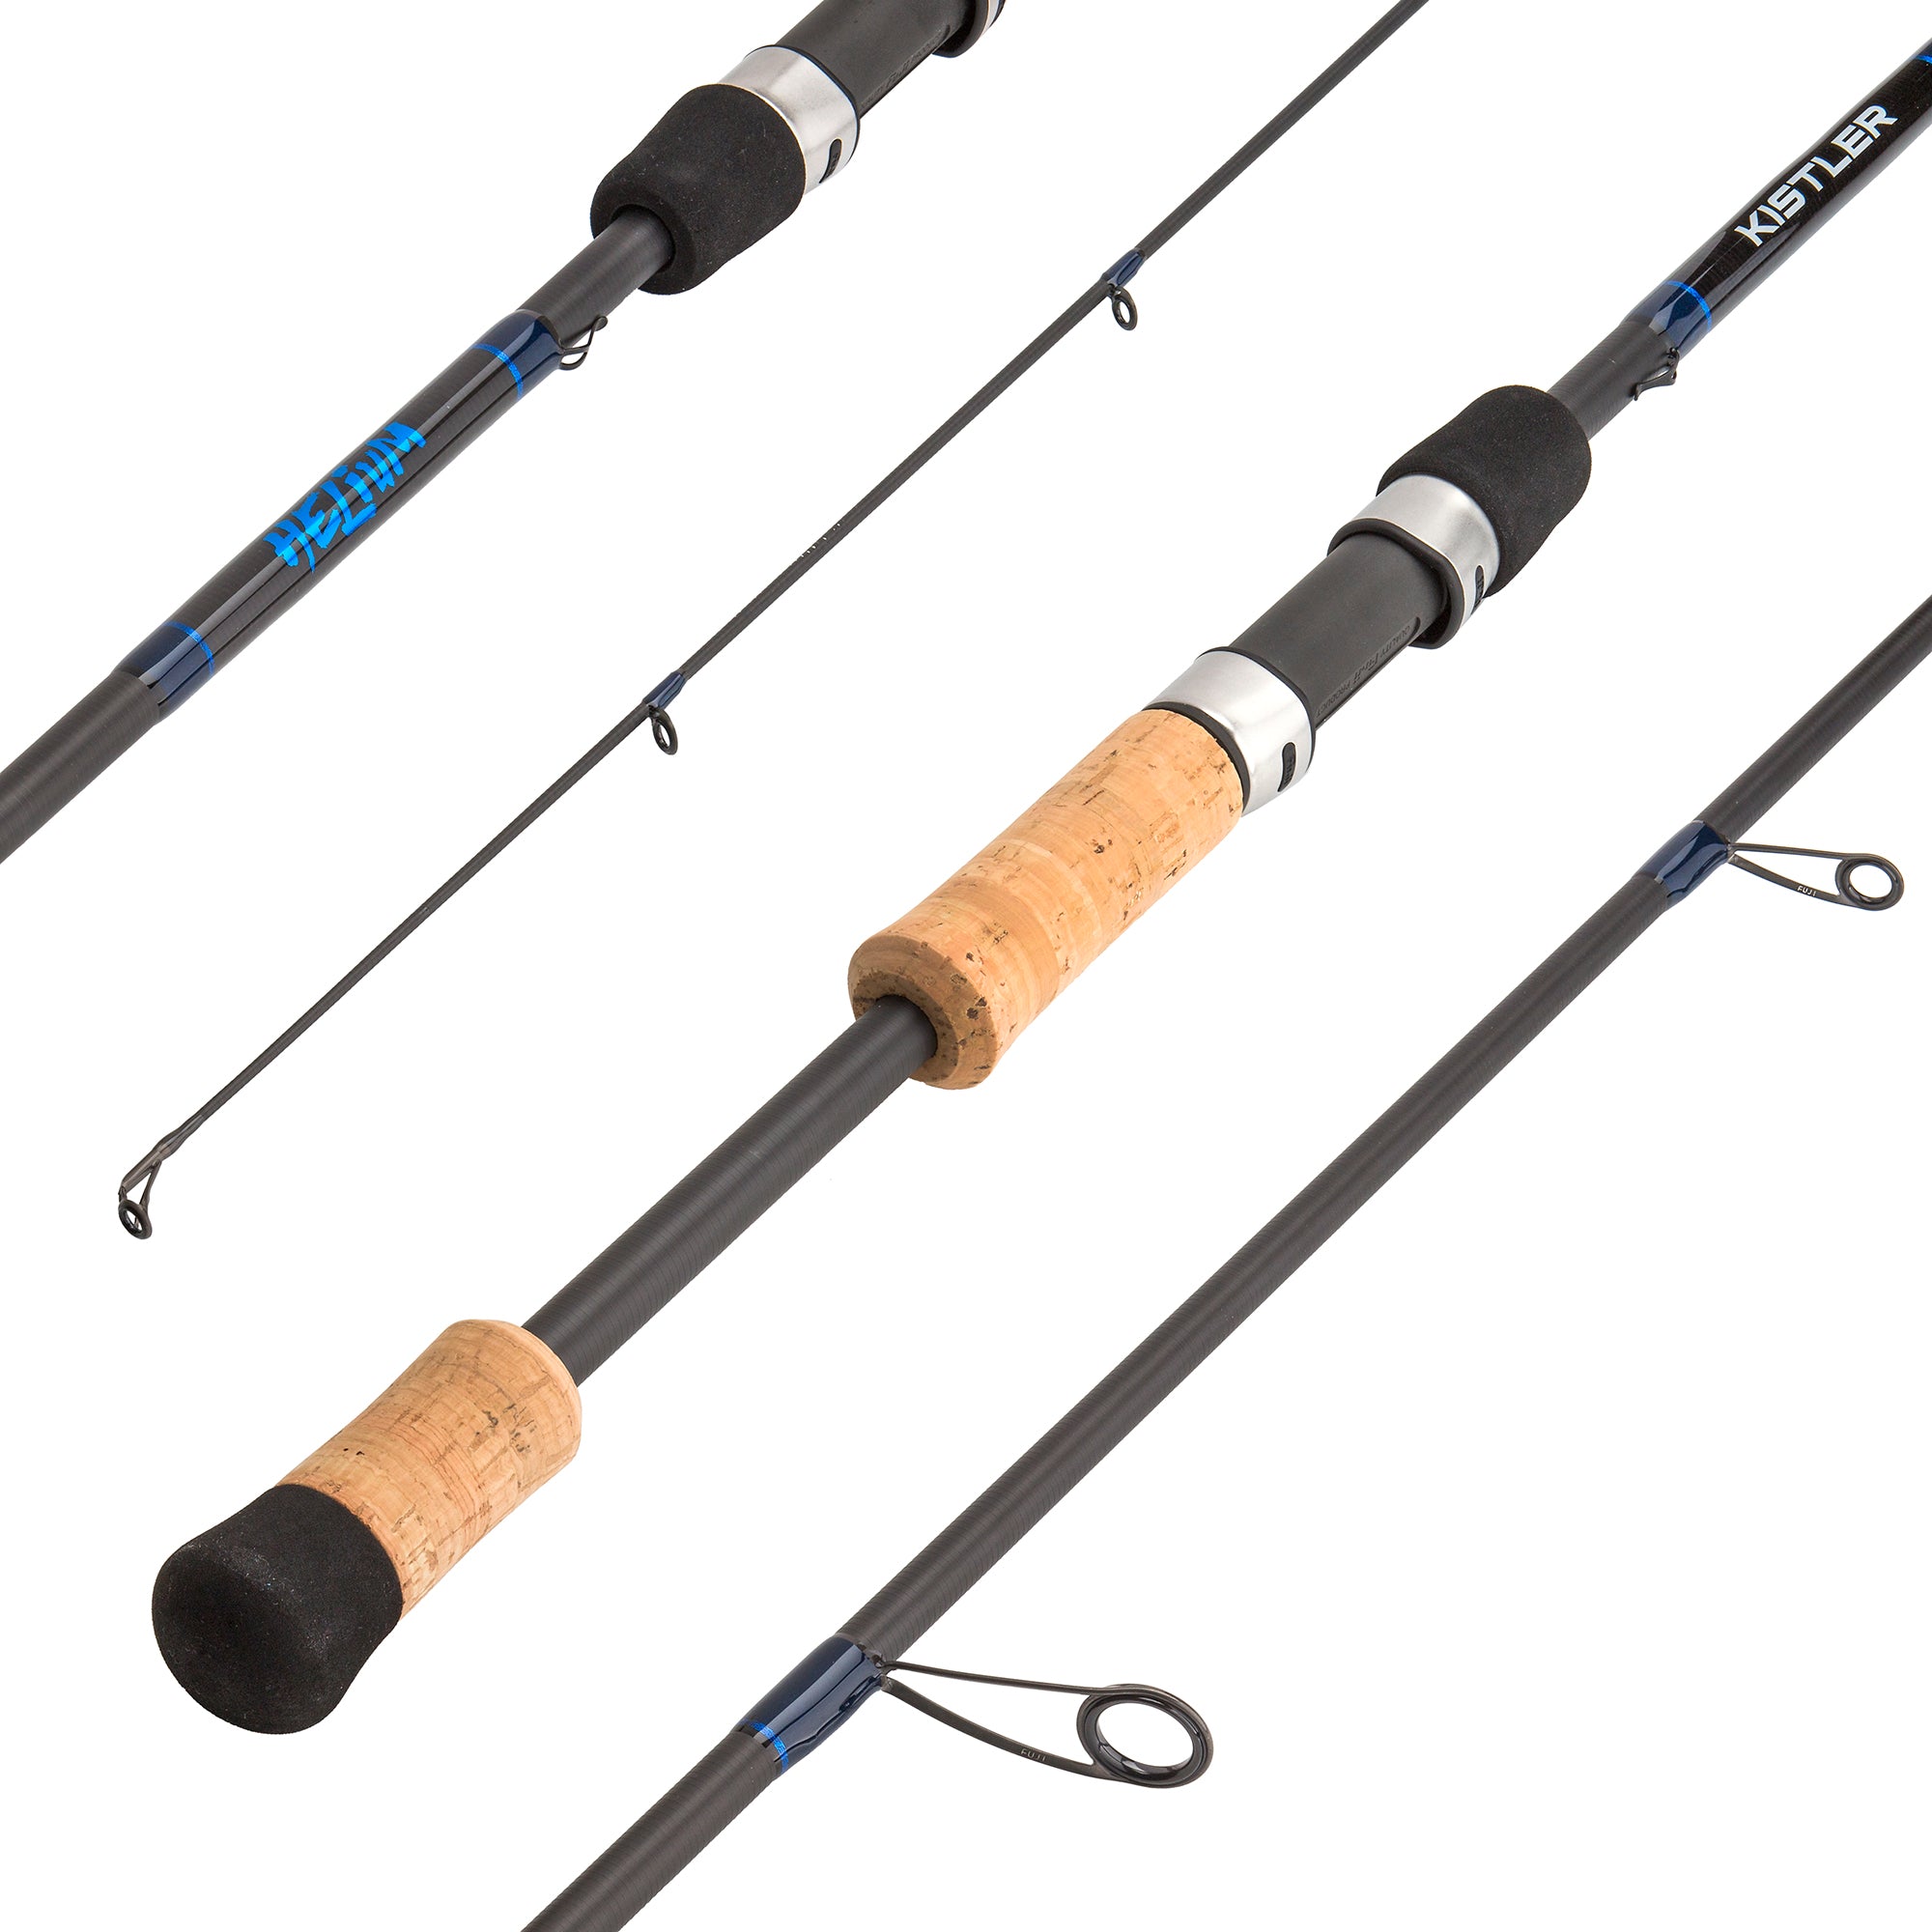 Super Seeker Fishing Rod & Release Reel Product Review